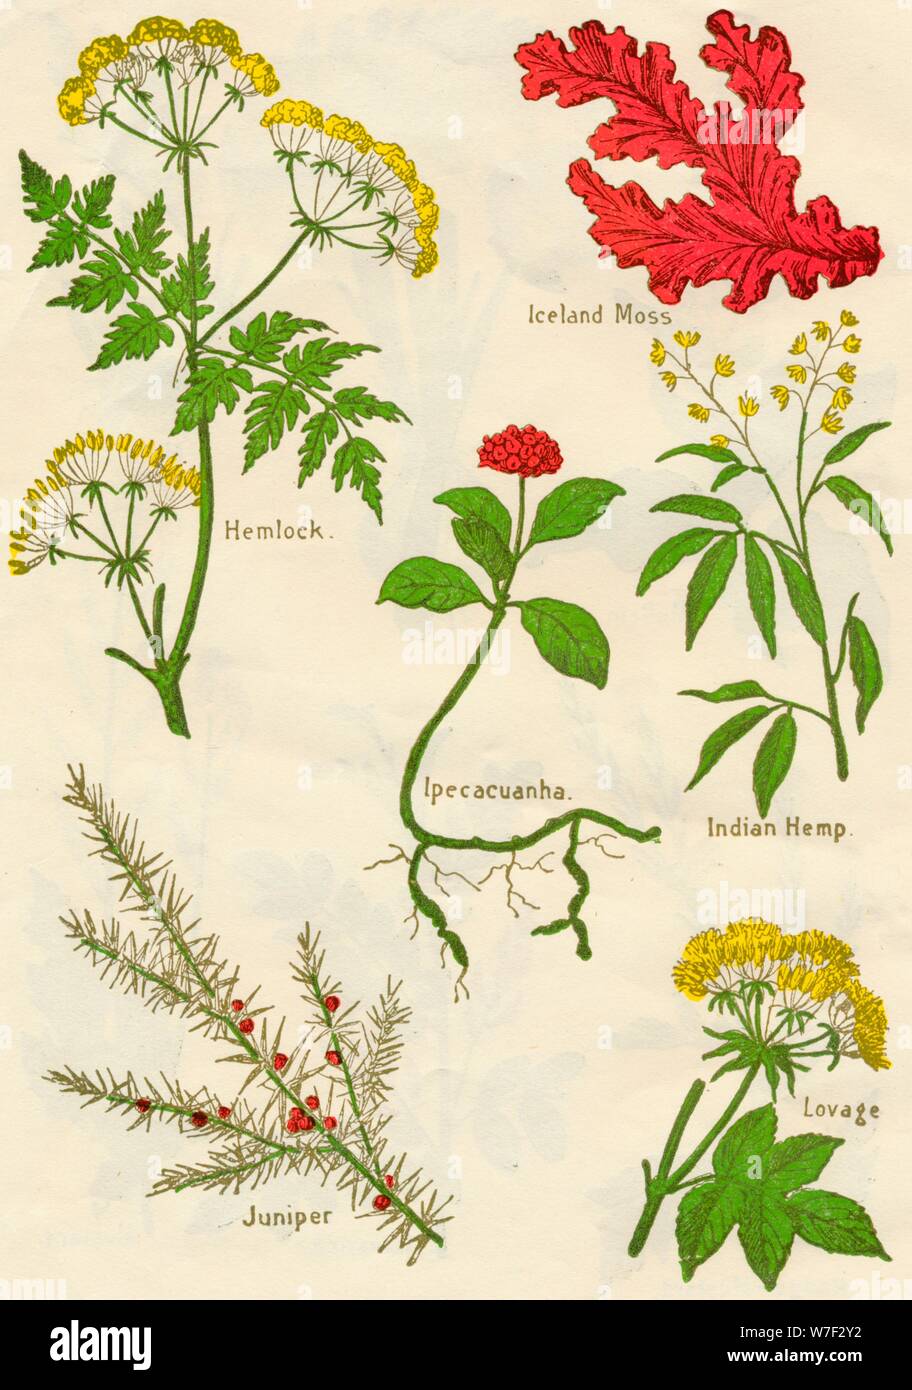 Flowers: Hemlock, Iceland Moss, Ipecacuanha, Indian Hemp, Juniper, Lovage, c1940. Artist: Unknown. Stock Photo